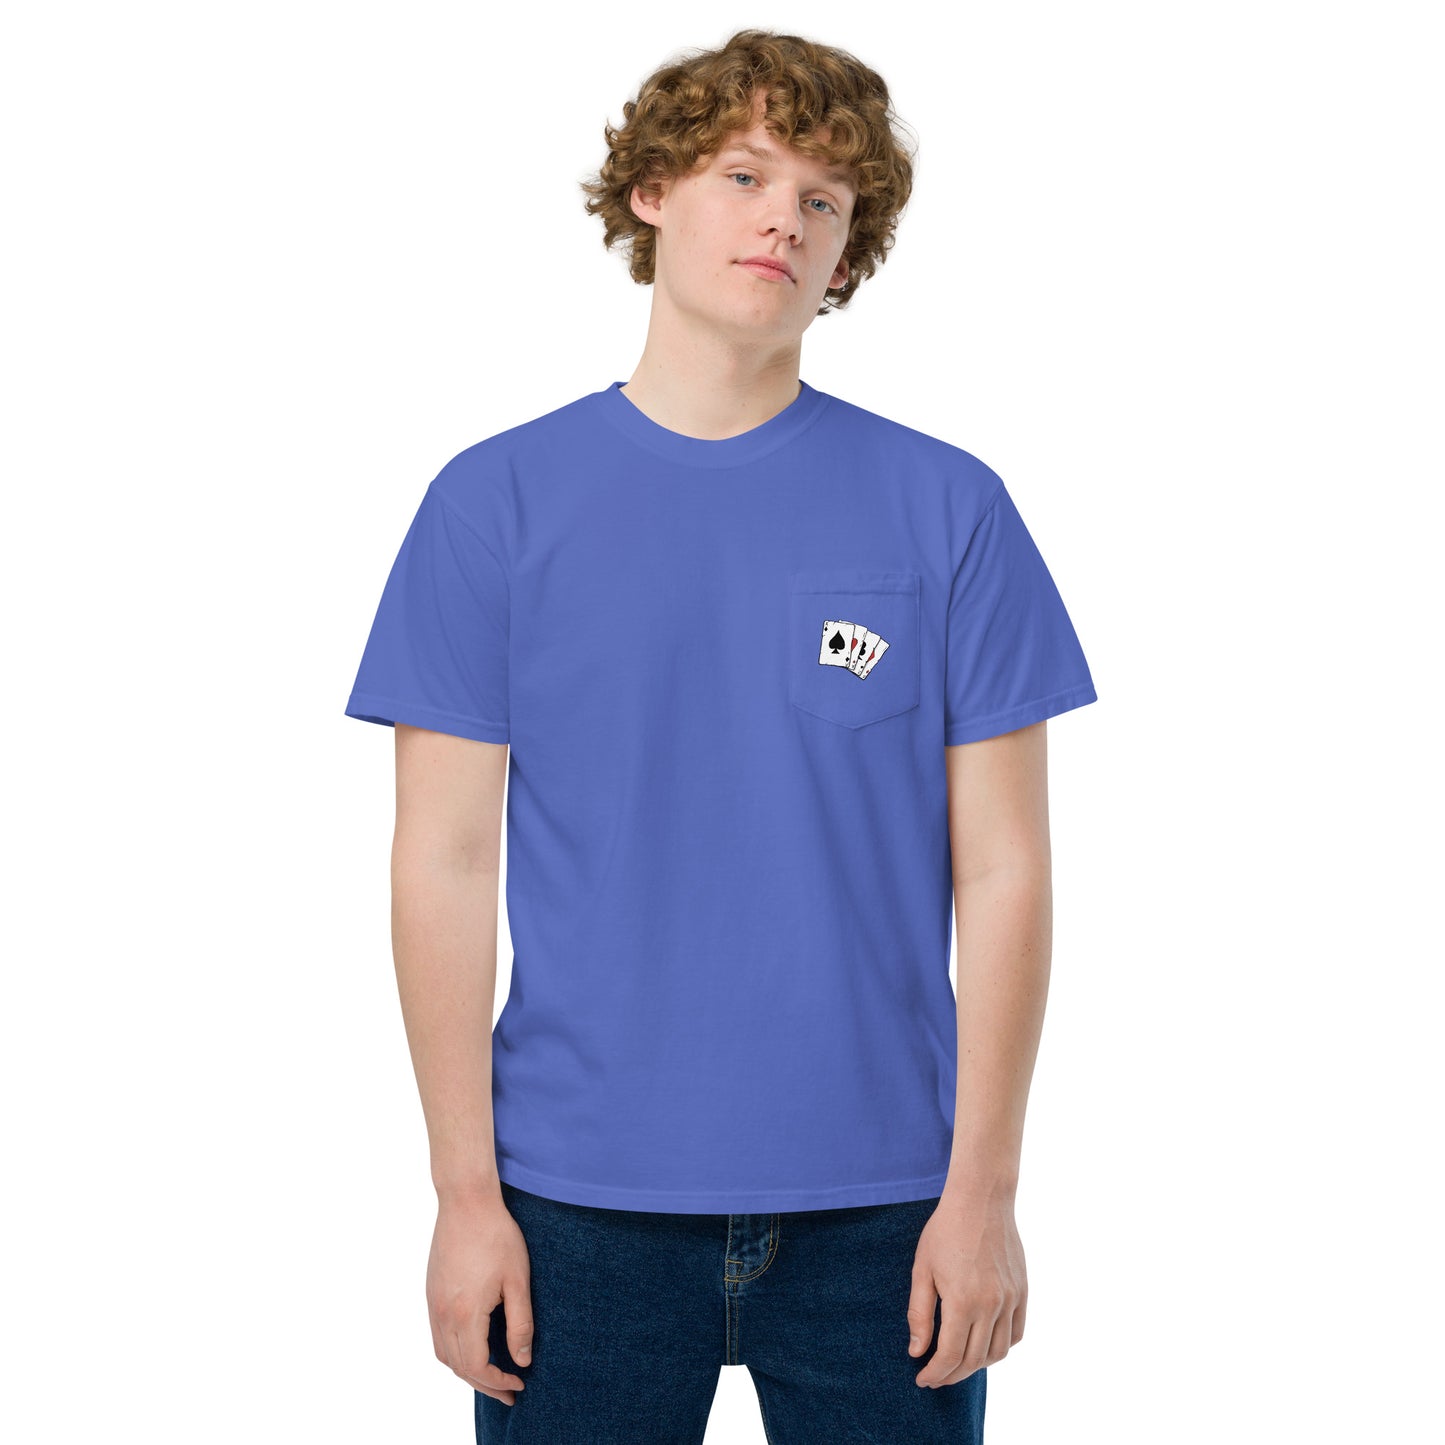 Gambler Pocket T-Shirt